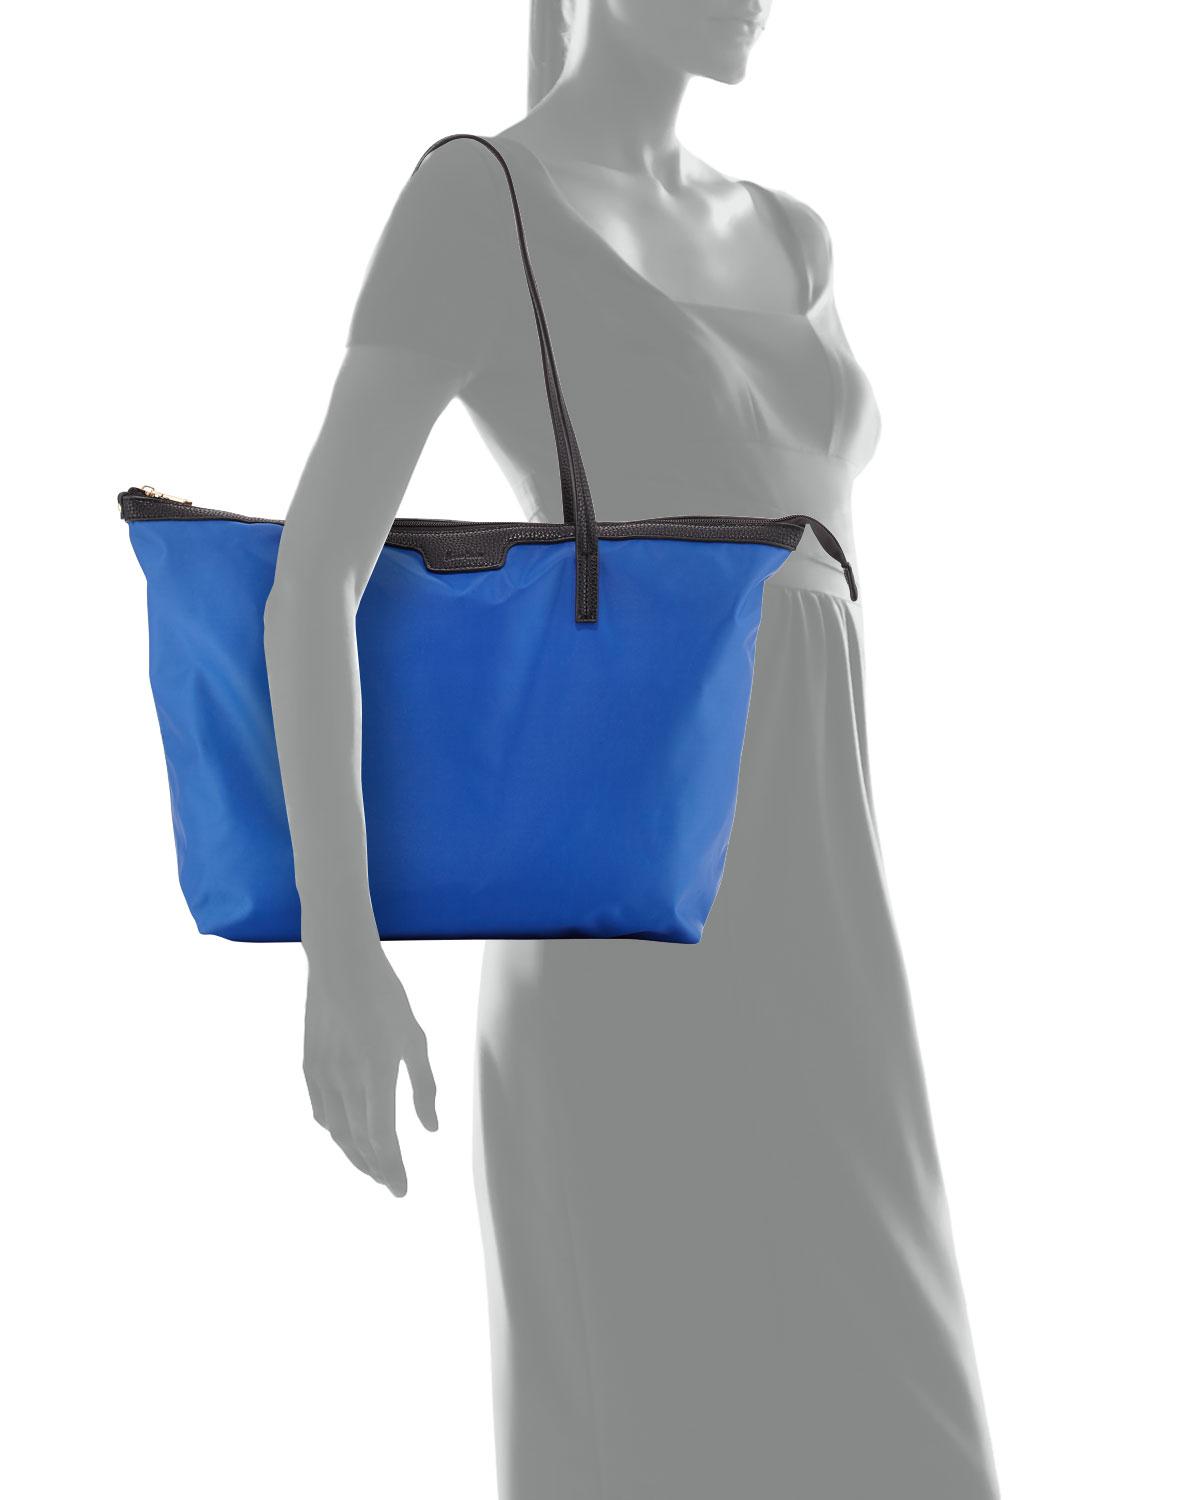 Neiman Marcus Synthetic Miley Nylon Zip-top Tote Bag in Cobalt (Blue) - Lyst